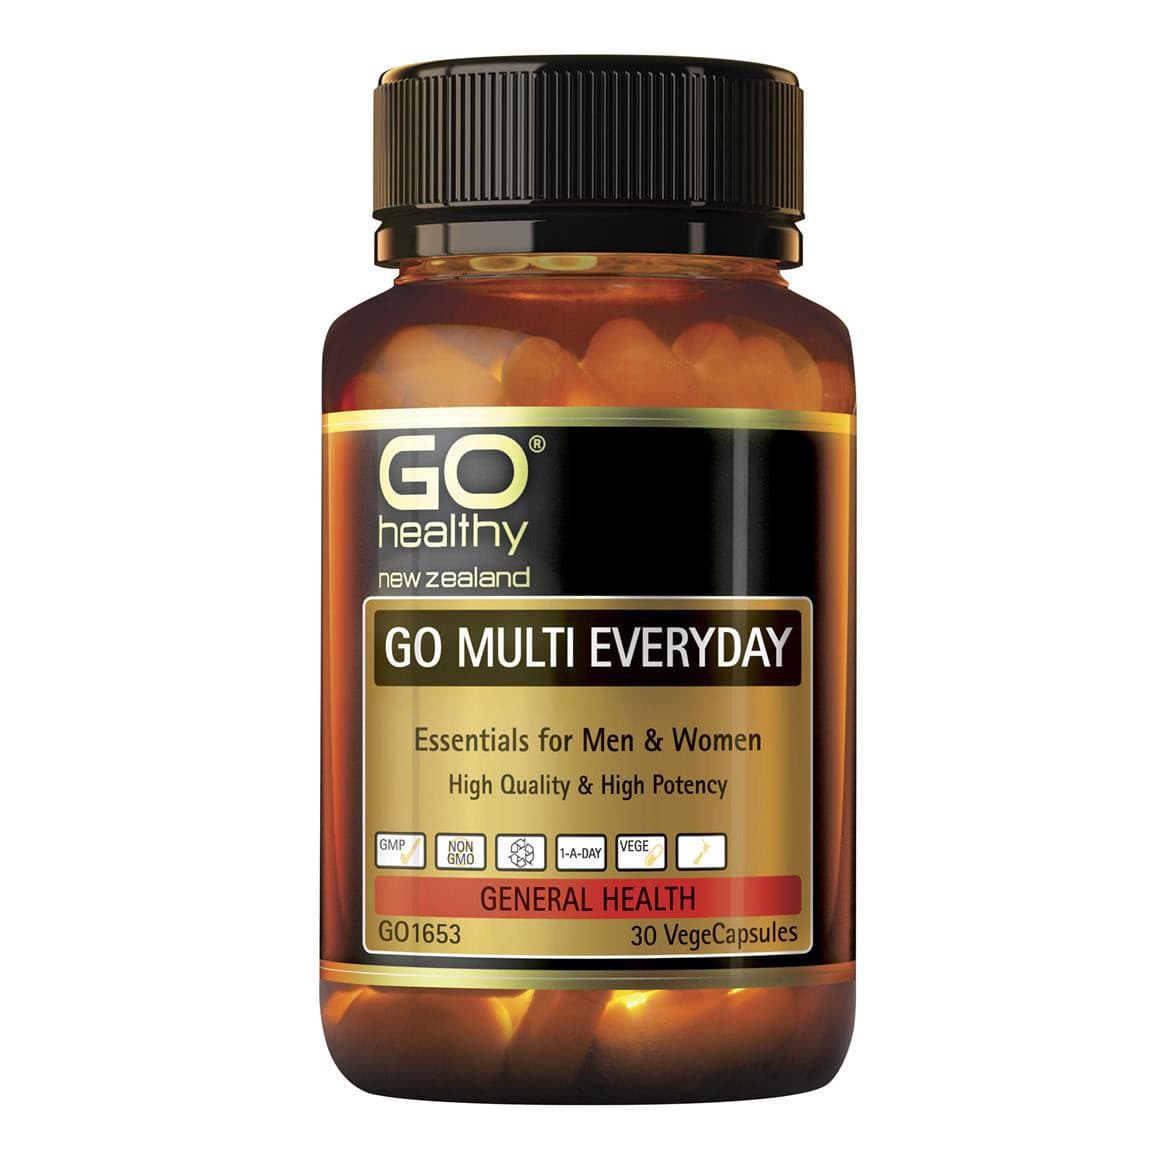 GO Healthy GO Multi Everyday.